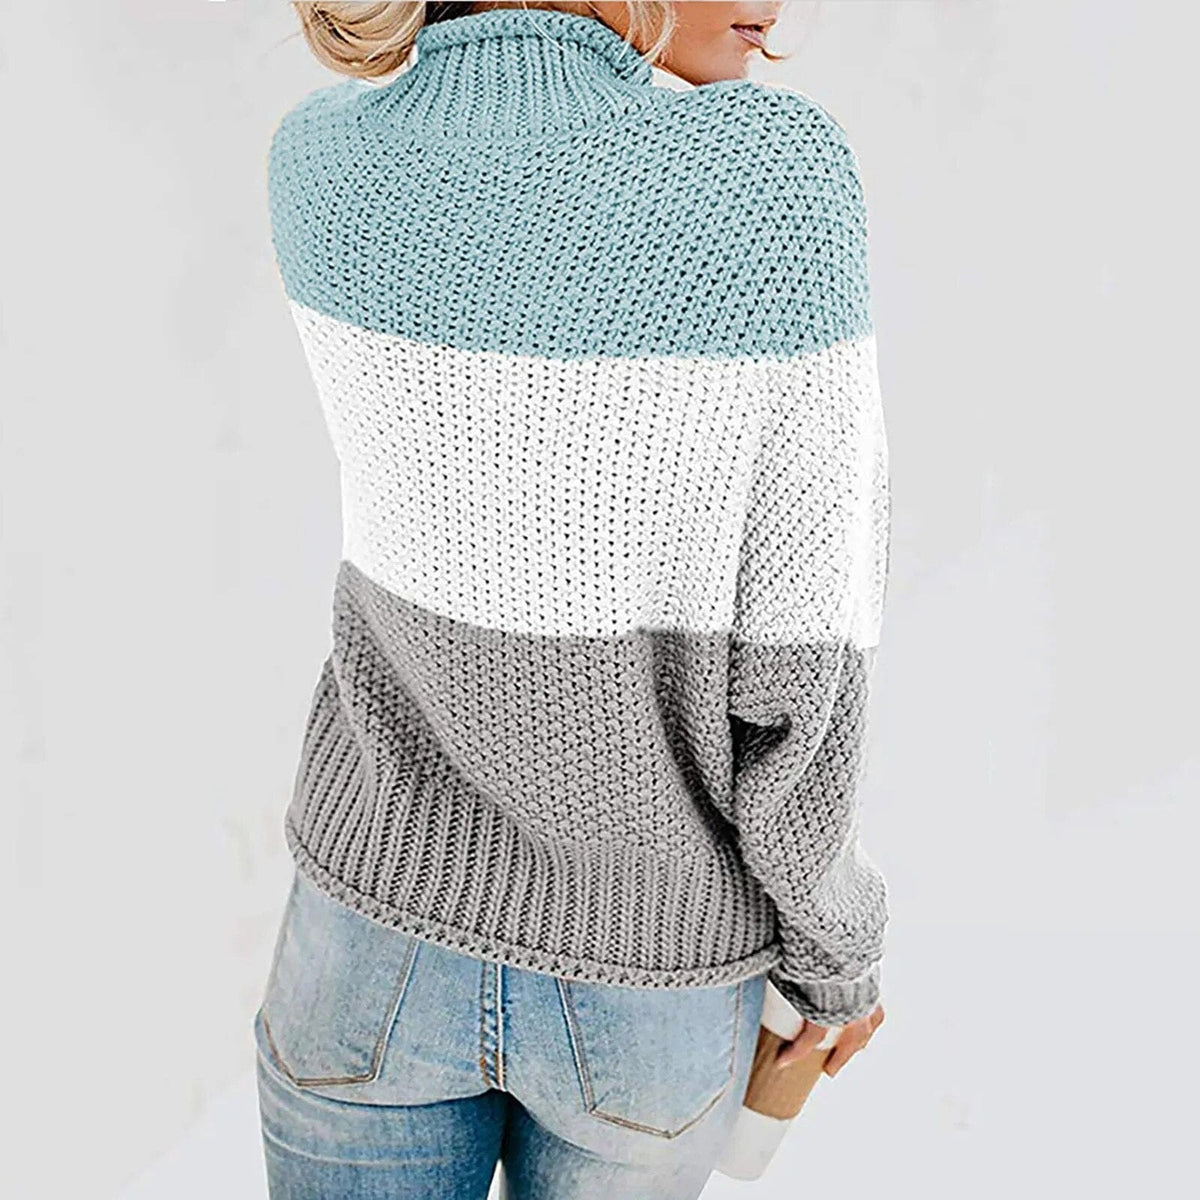 Boho Beach Hut Sweaters, Pullover Sweater Boho Striped Knit Sweater